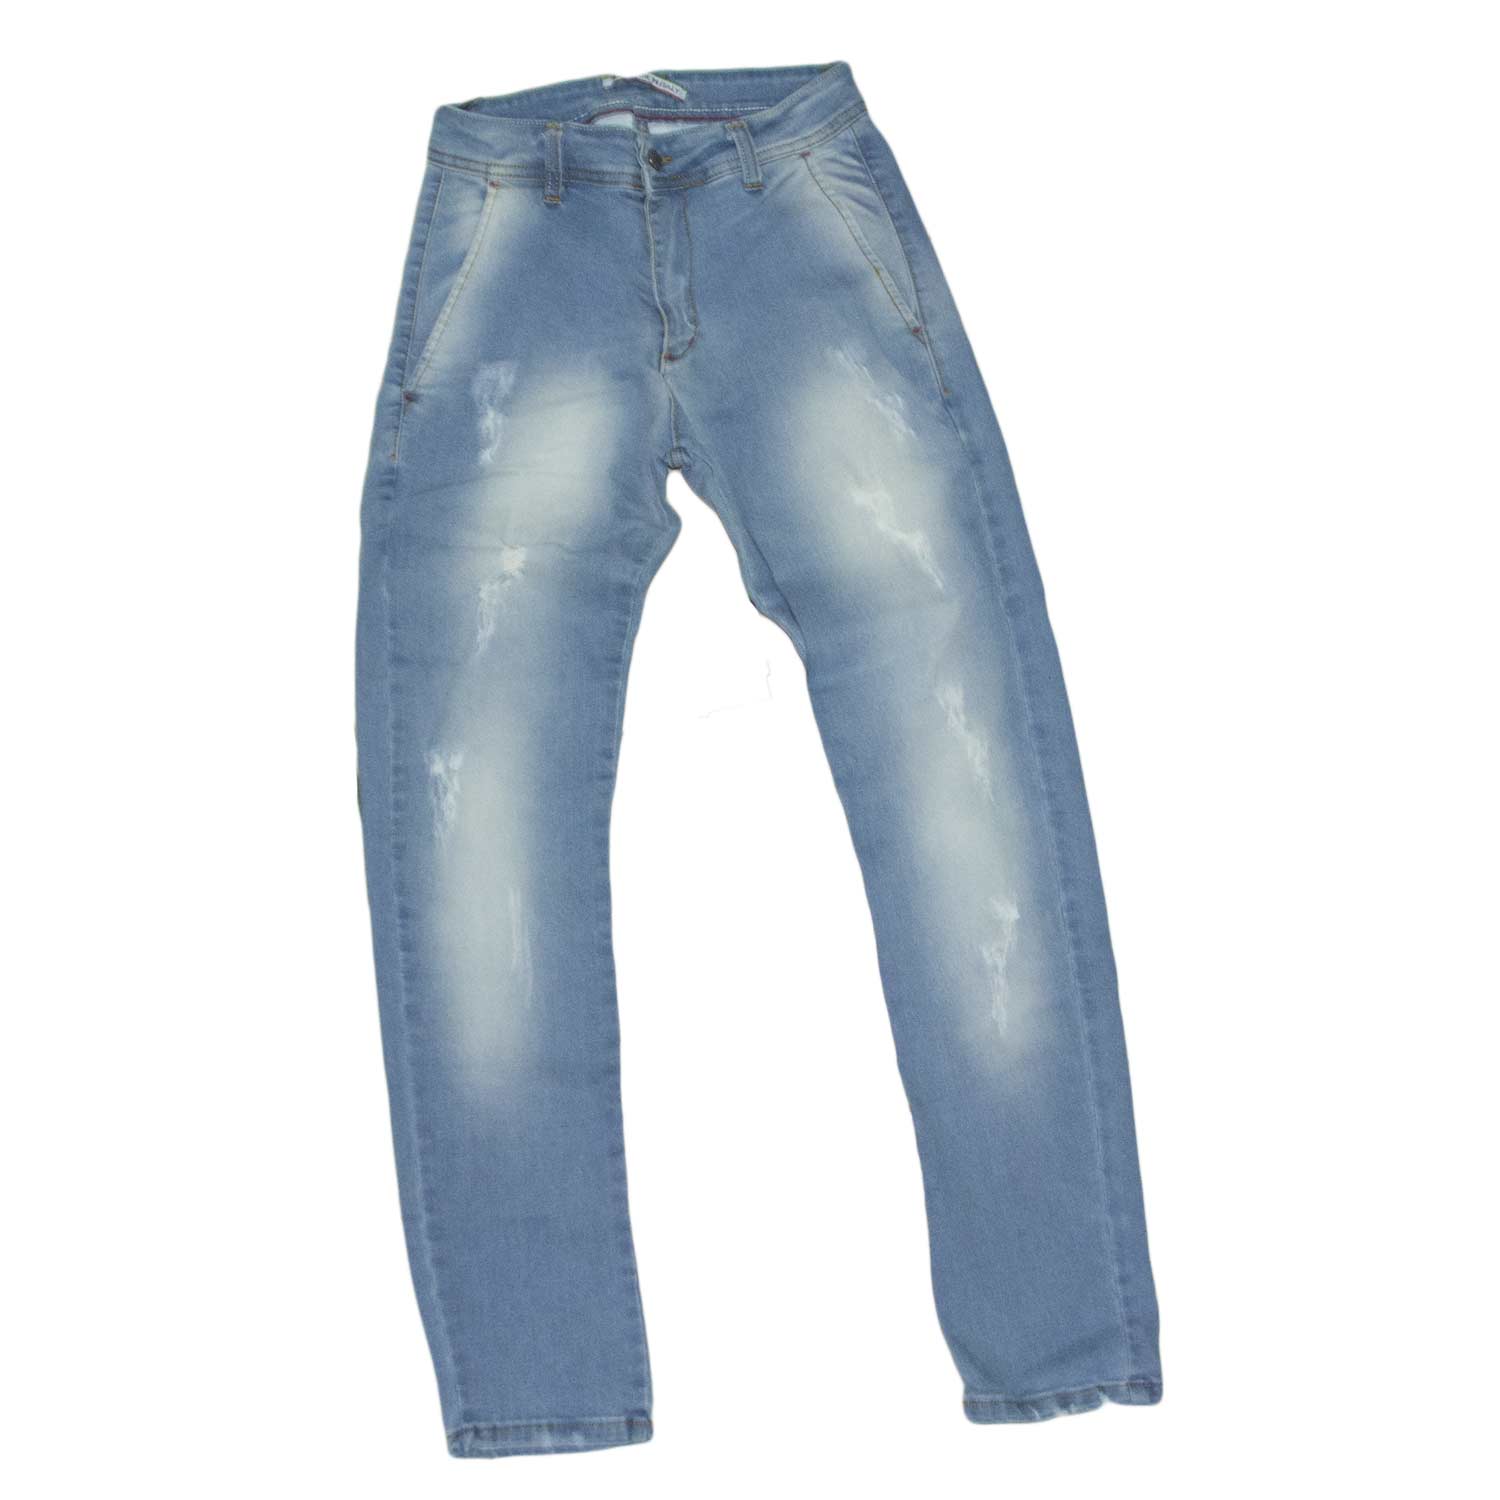 blu jeans uomo man stracciato moda made in italy.